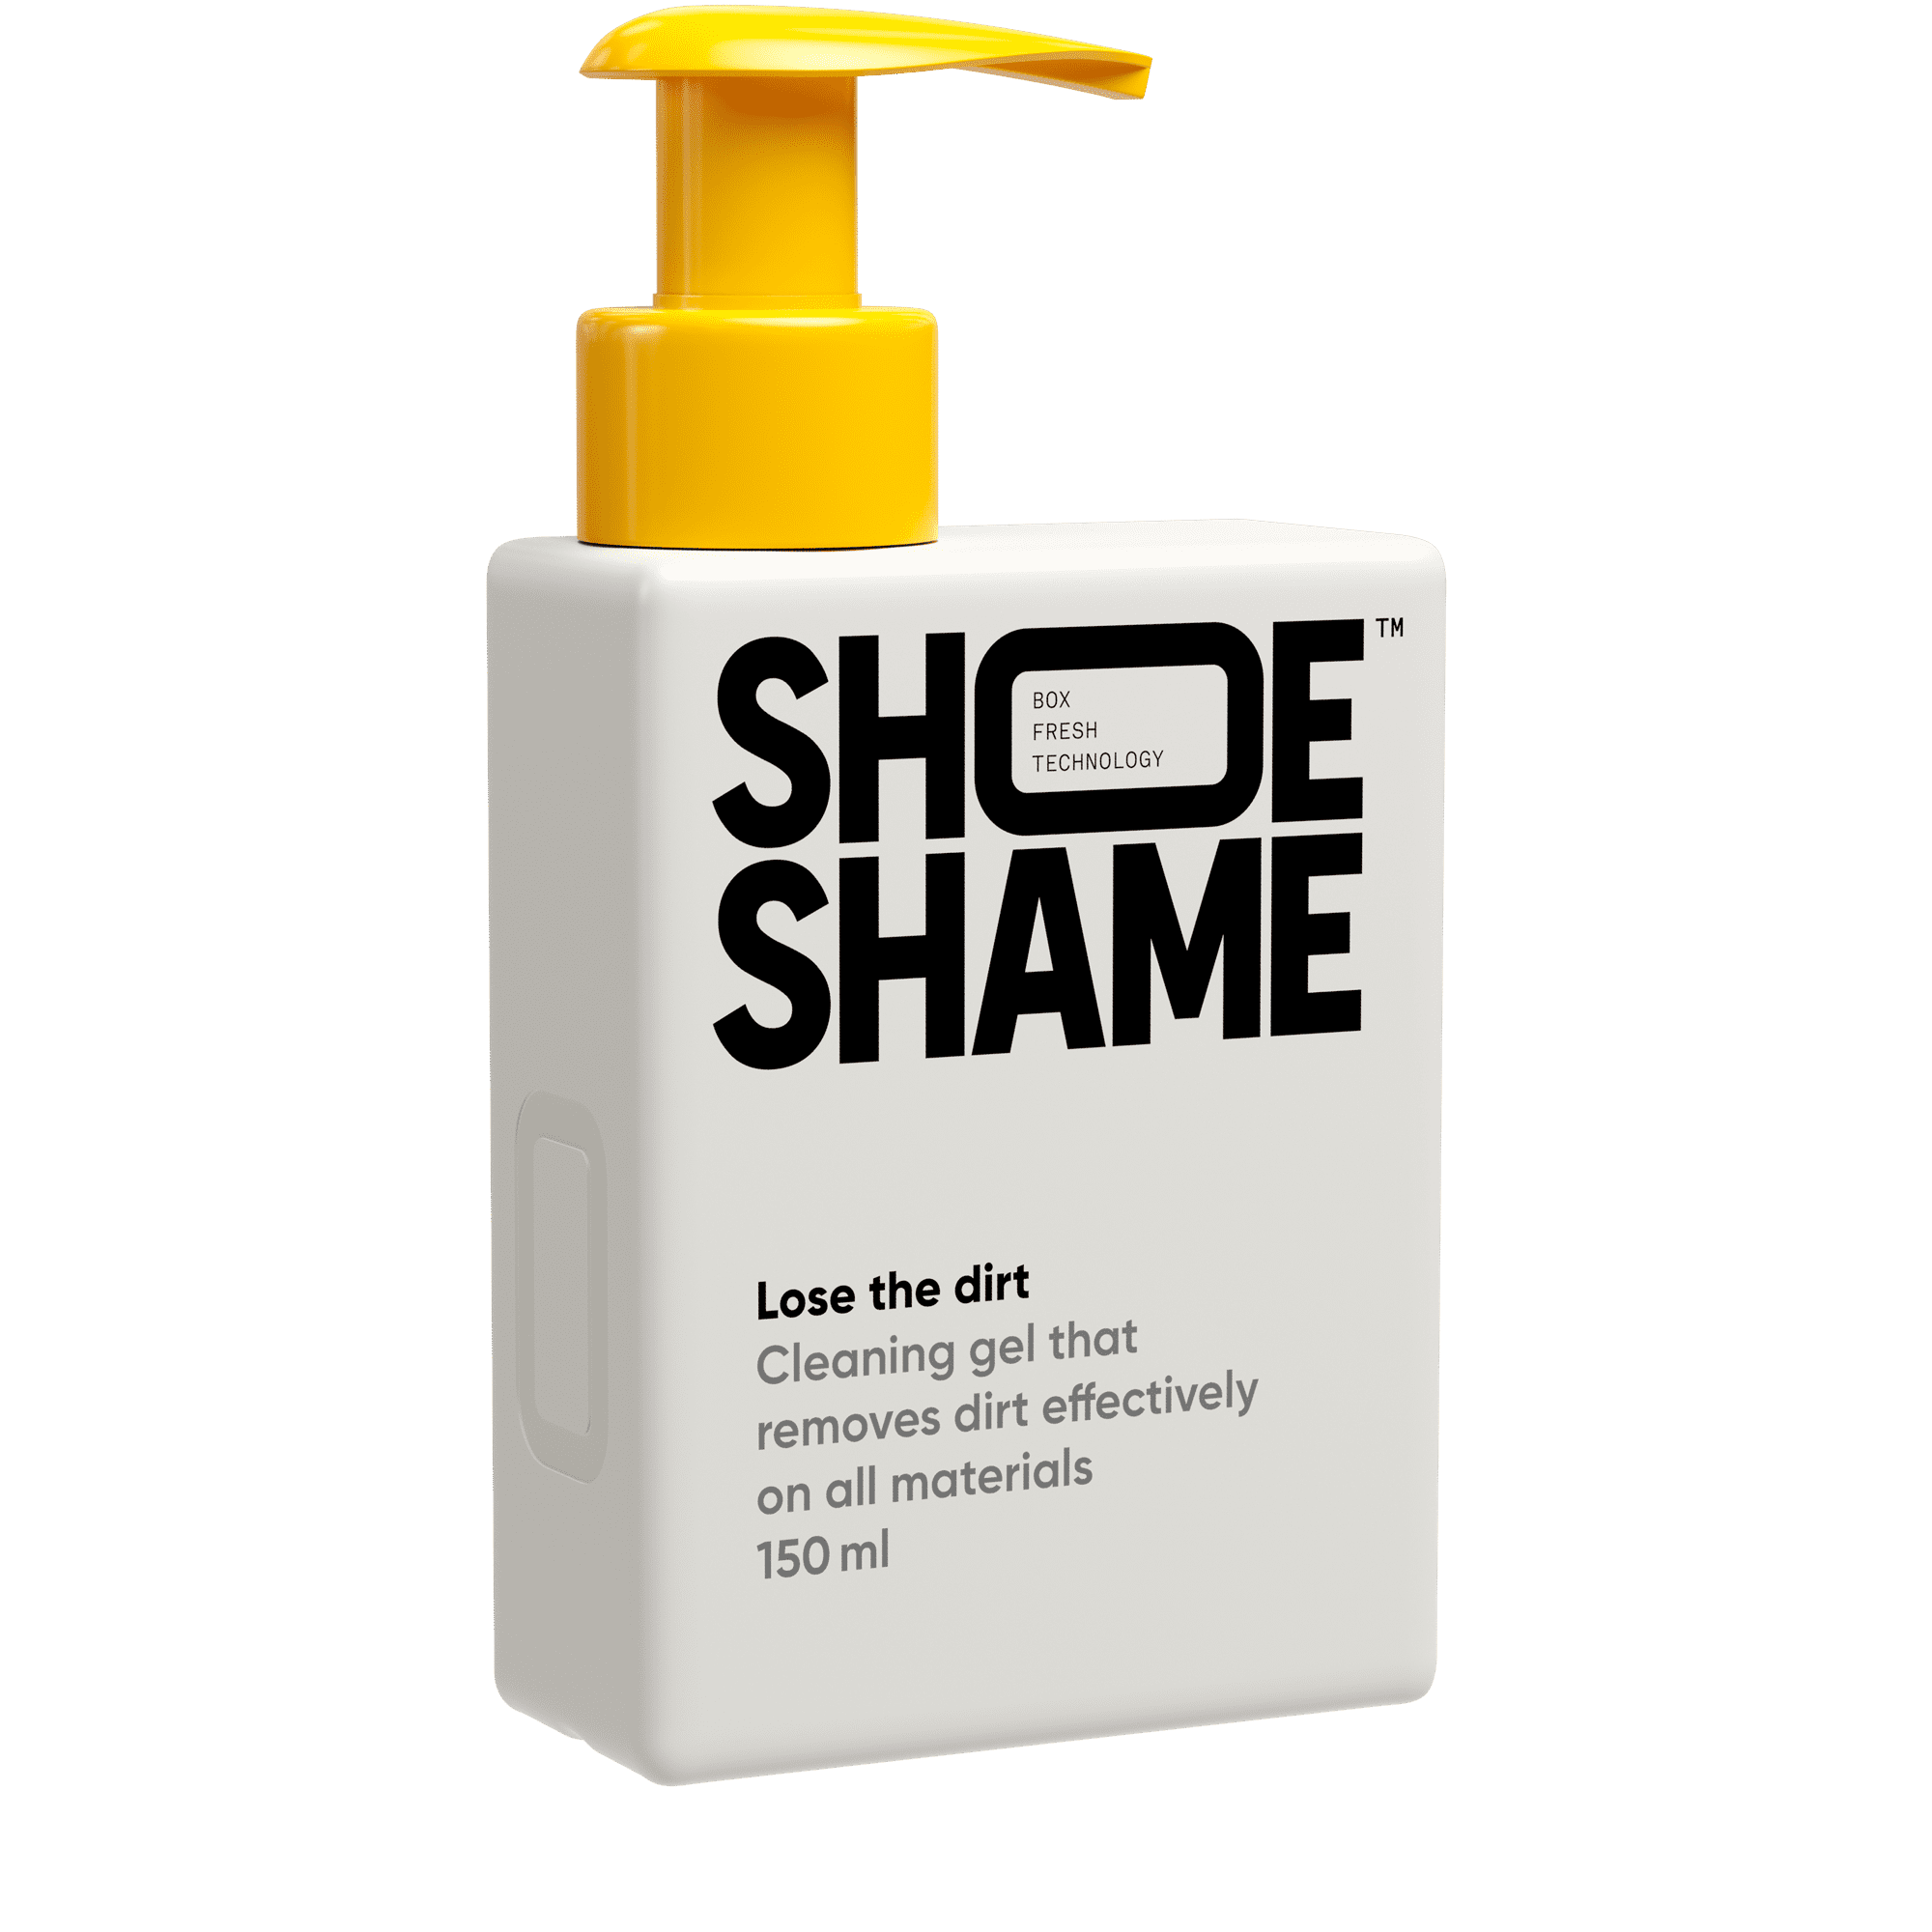 SHOE SHAME Shoe Shame Lose the dirt